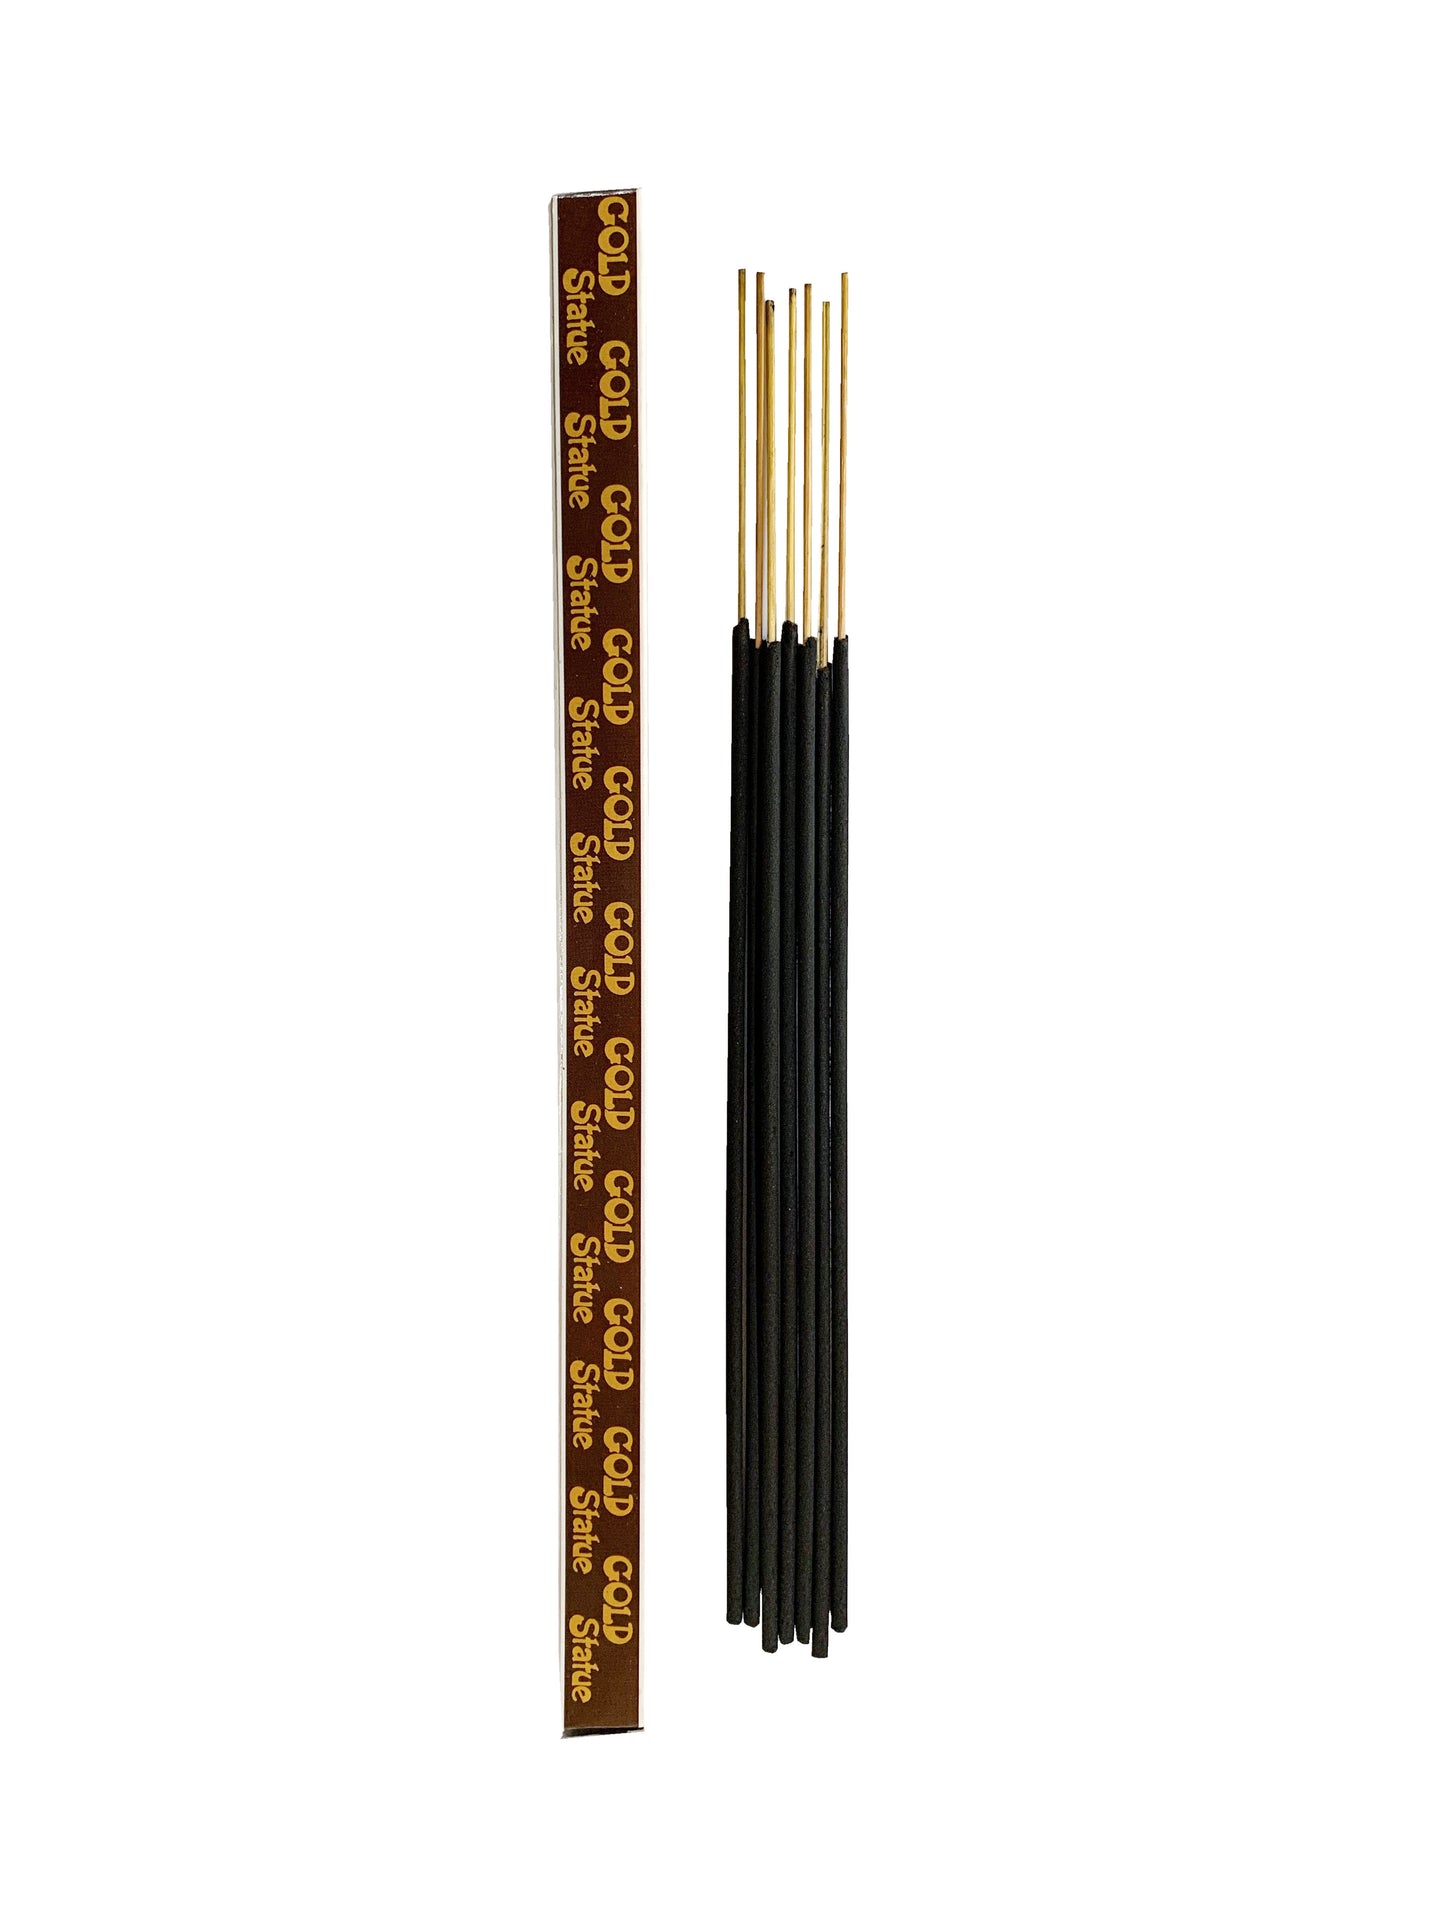 Gold Statue ~ Padmini  Incense Sticks